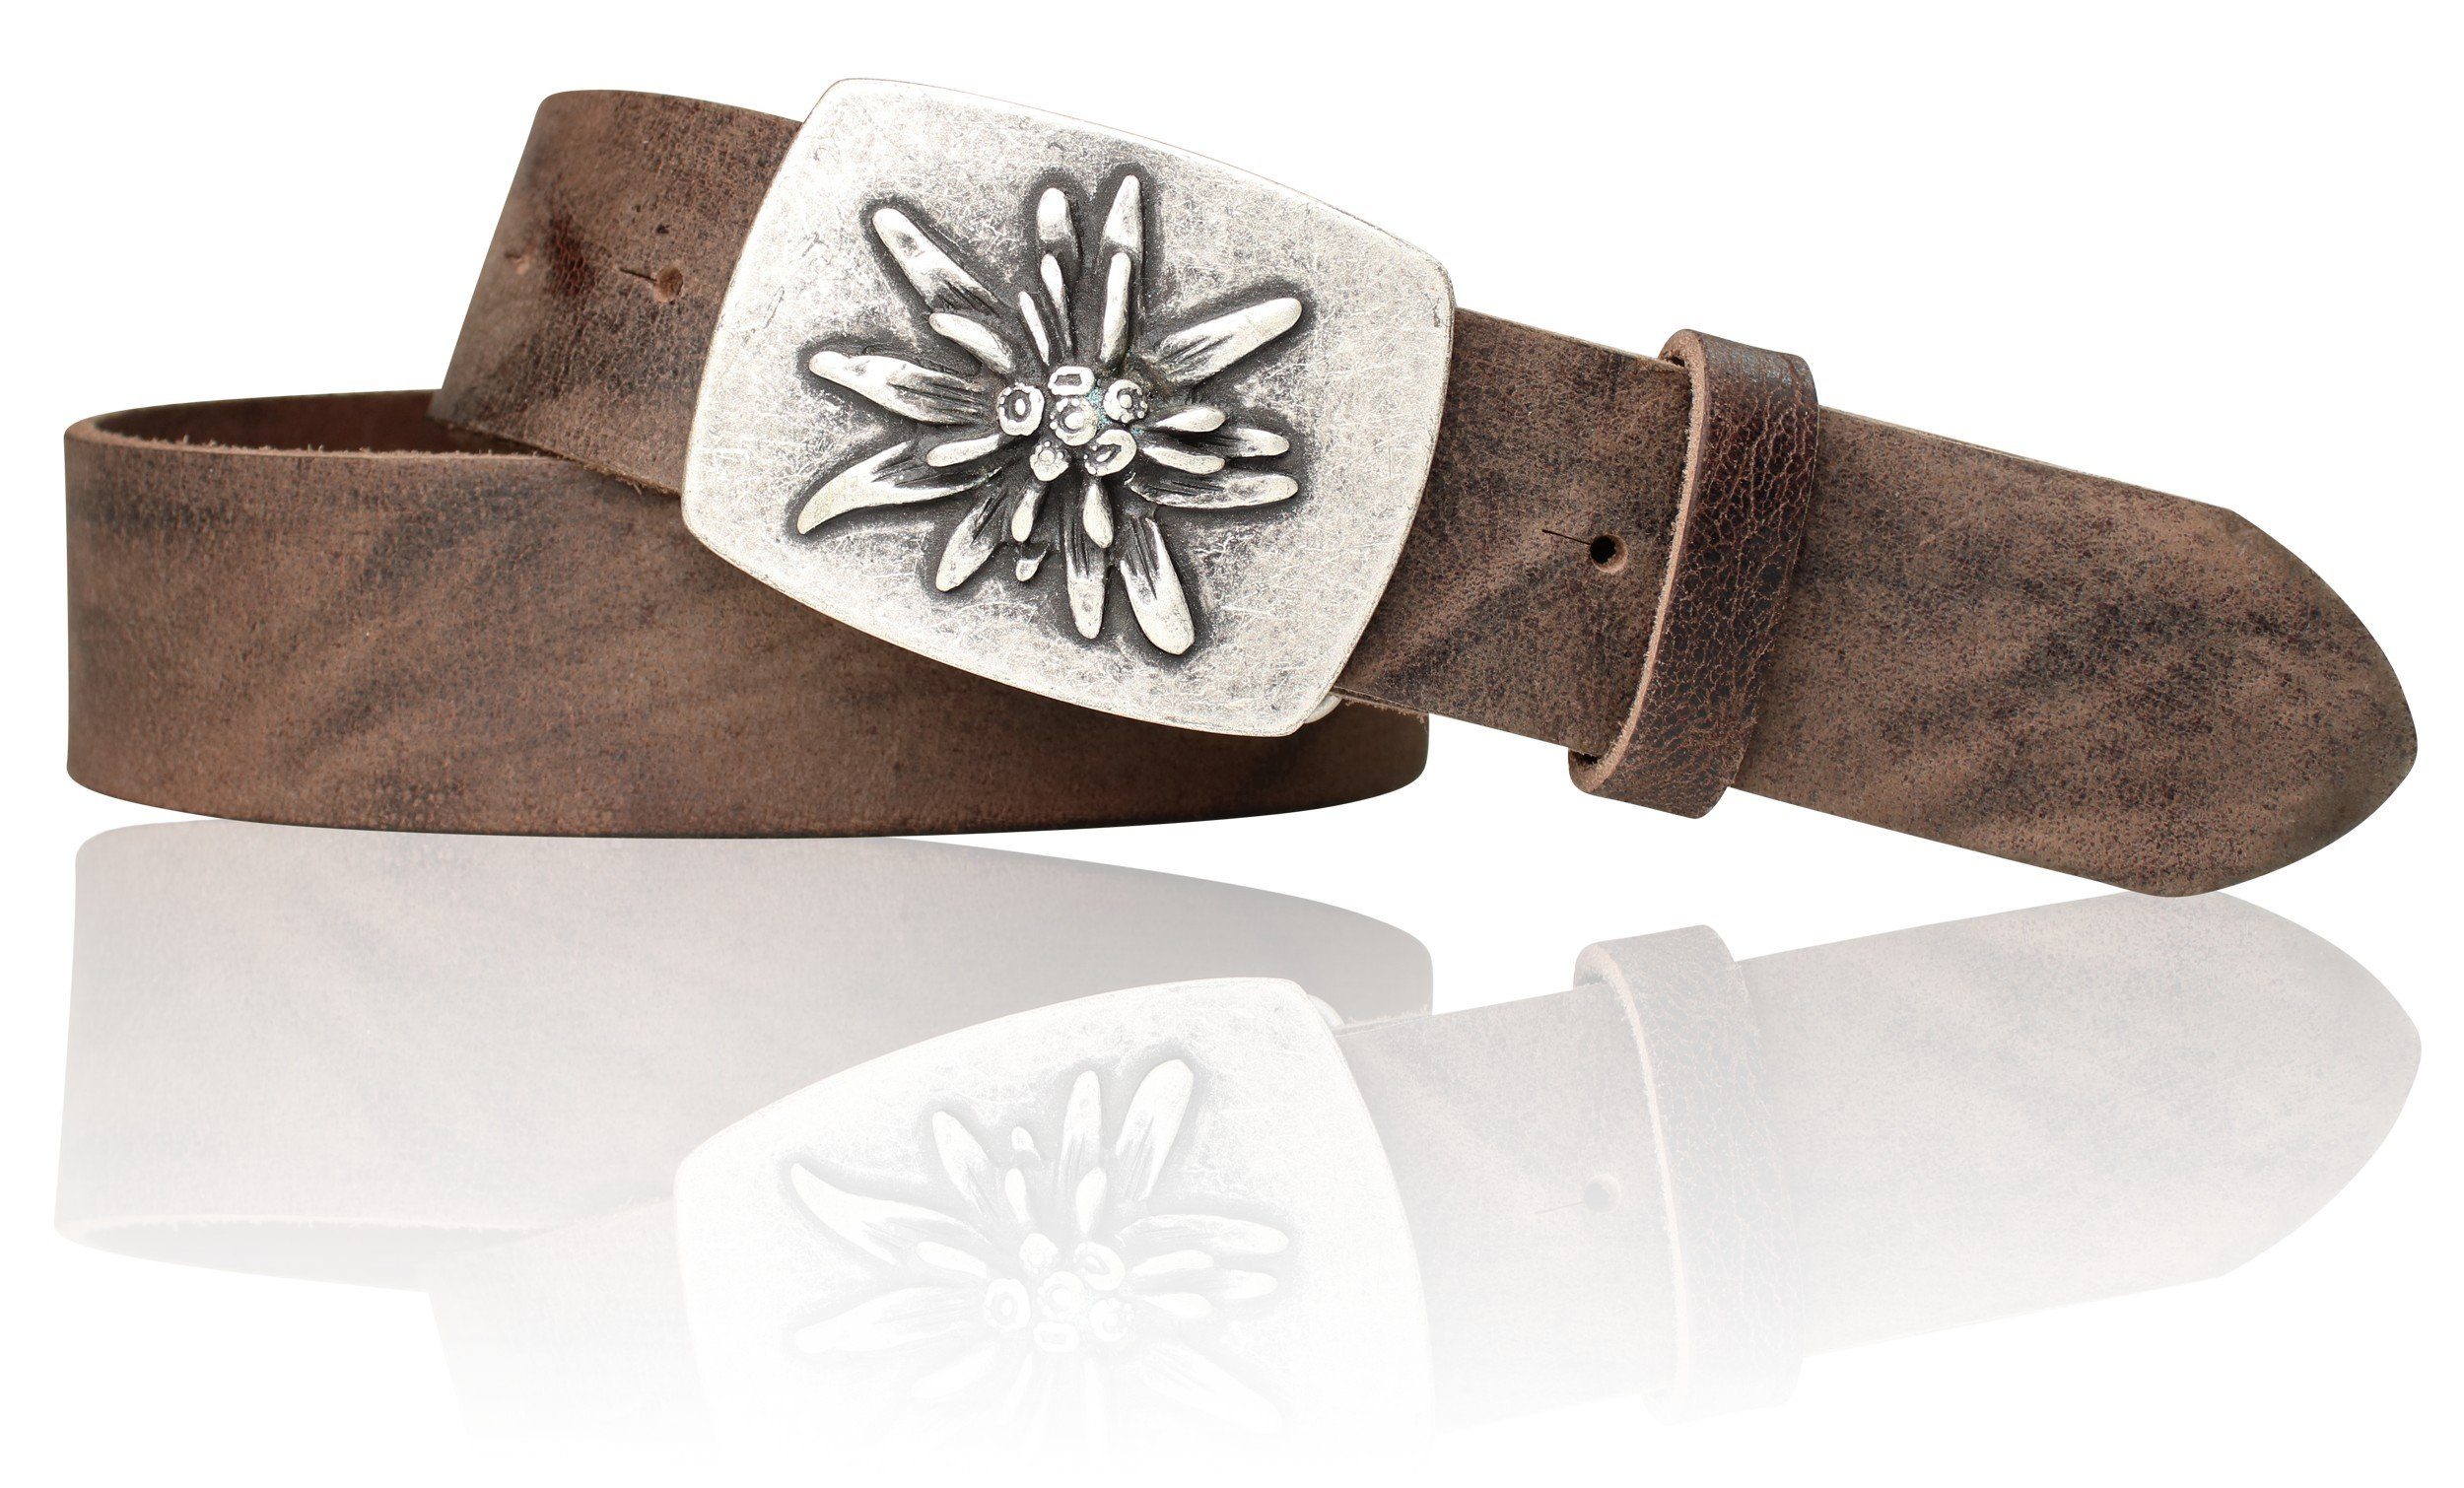 FRONHOFER Ledergürtel 17504 Trachtengürtel, Edelweiß Gürtelschnalle Antiksilber, echtes Leder Vintage-braun